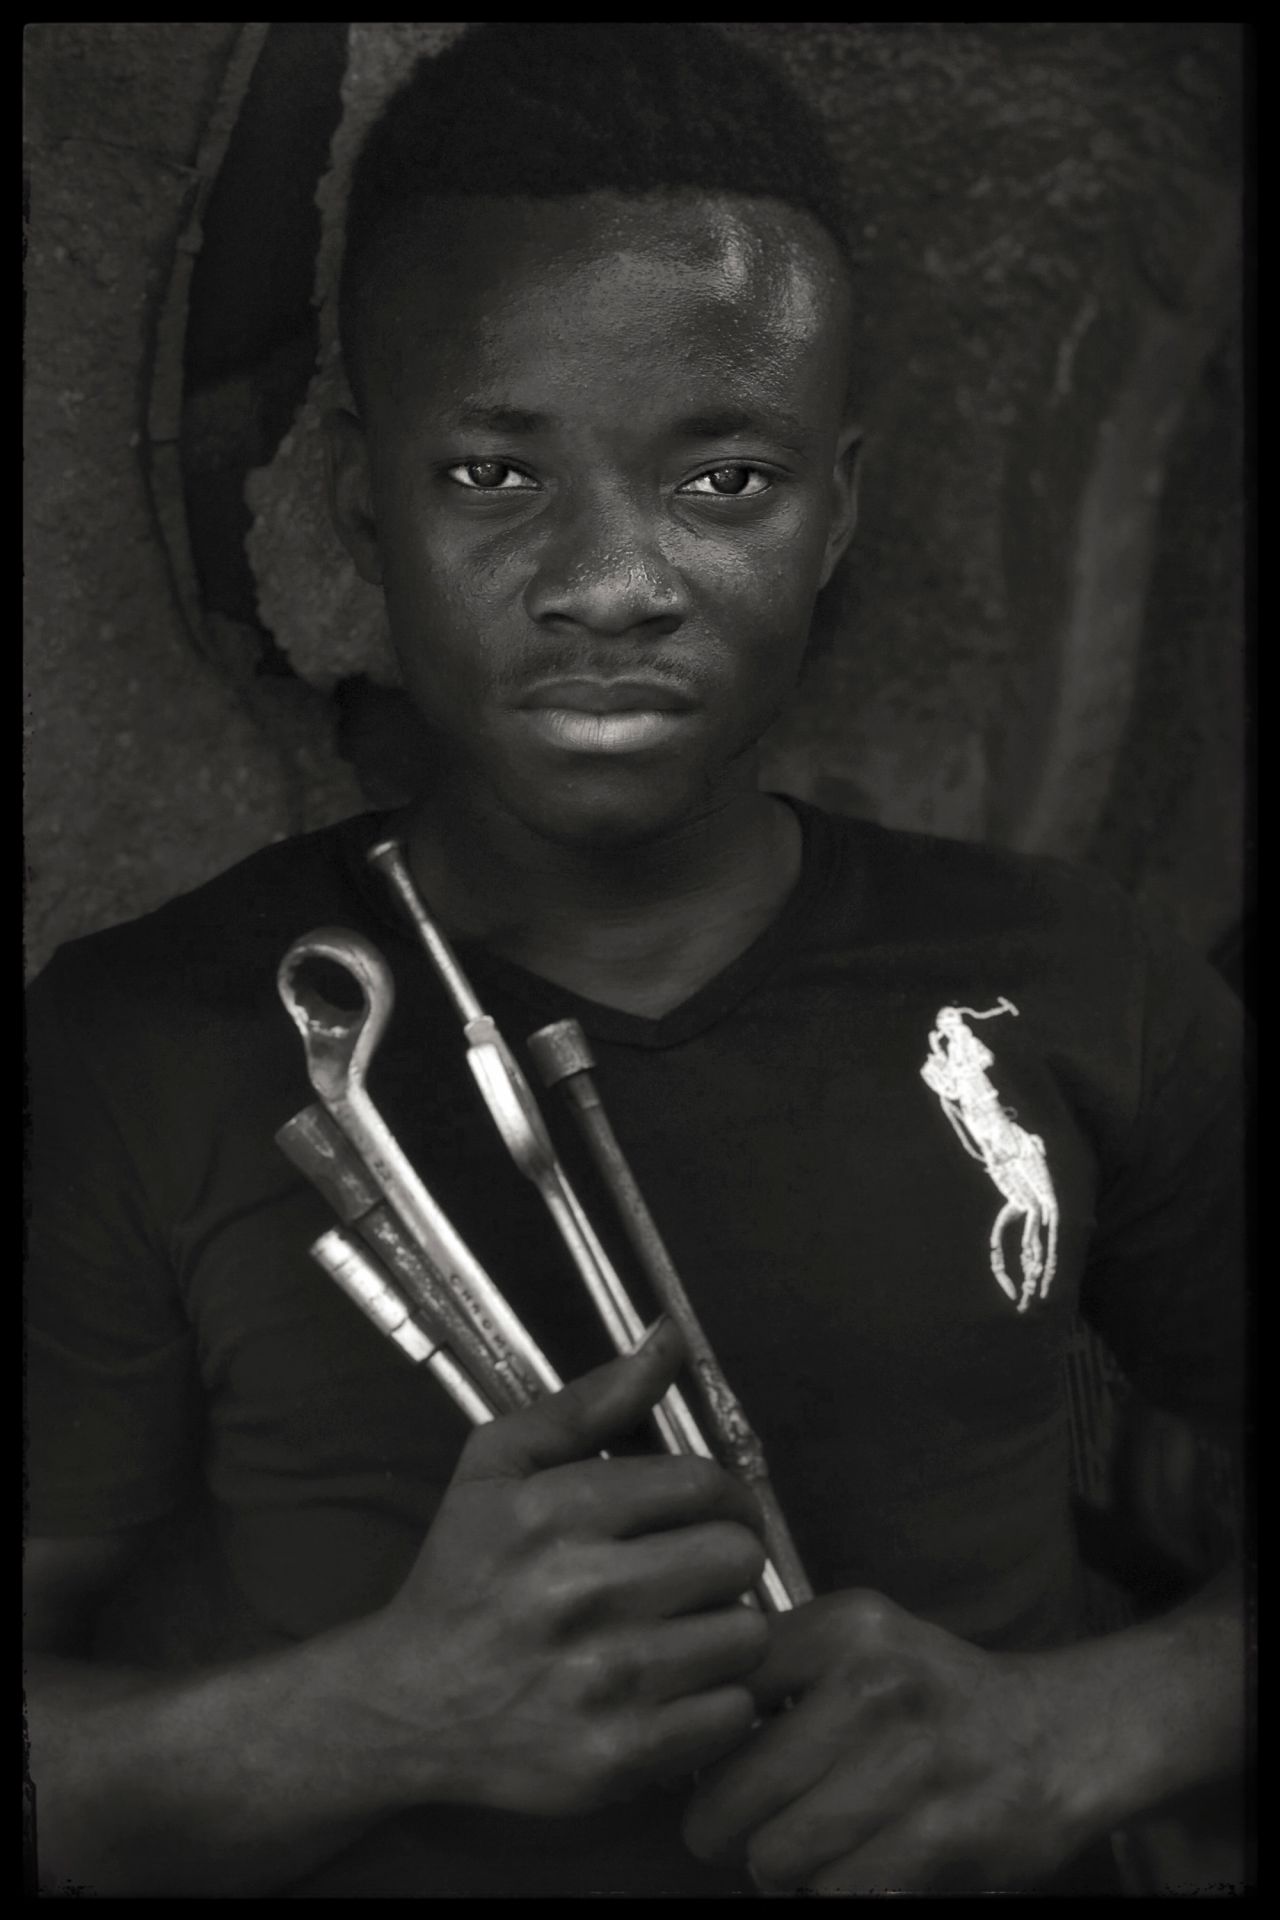 Barry Mayes, United Kingdom, 3rd Place -- Portrait, "Diesel Mechanic", Shot on iPhone 7 Plus, Kissy Town, Sierra Leone